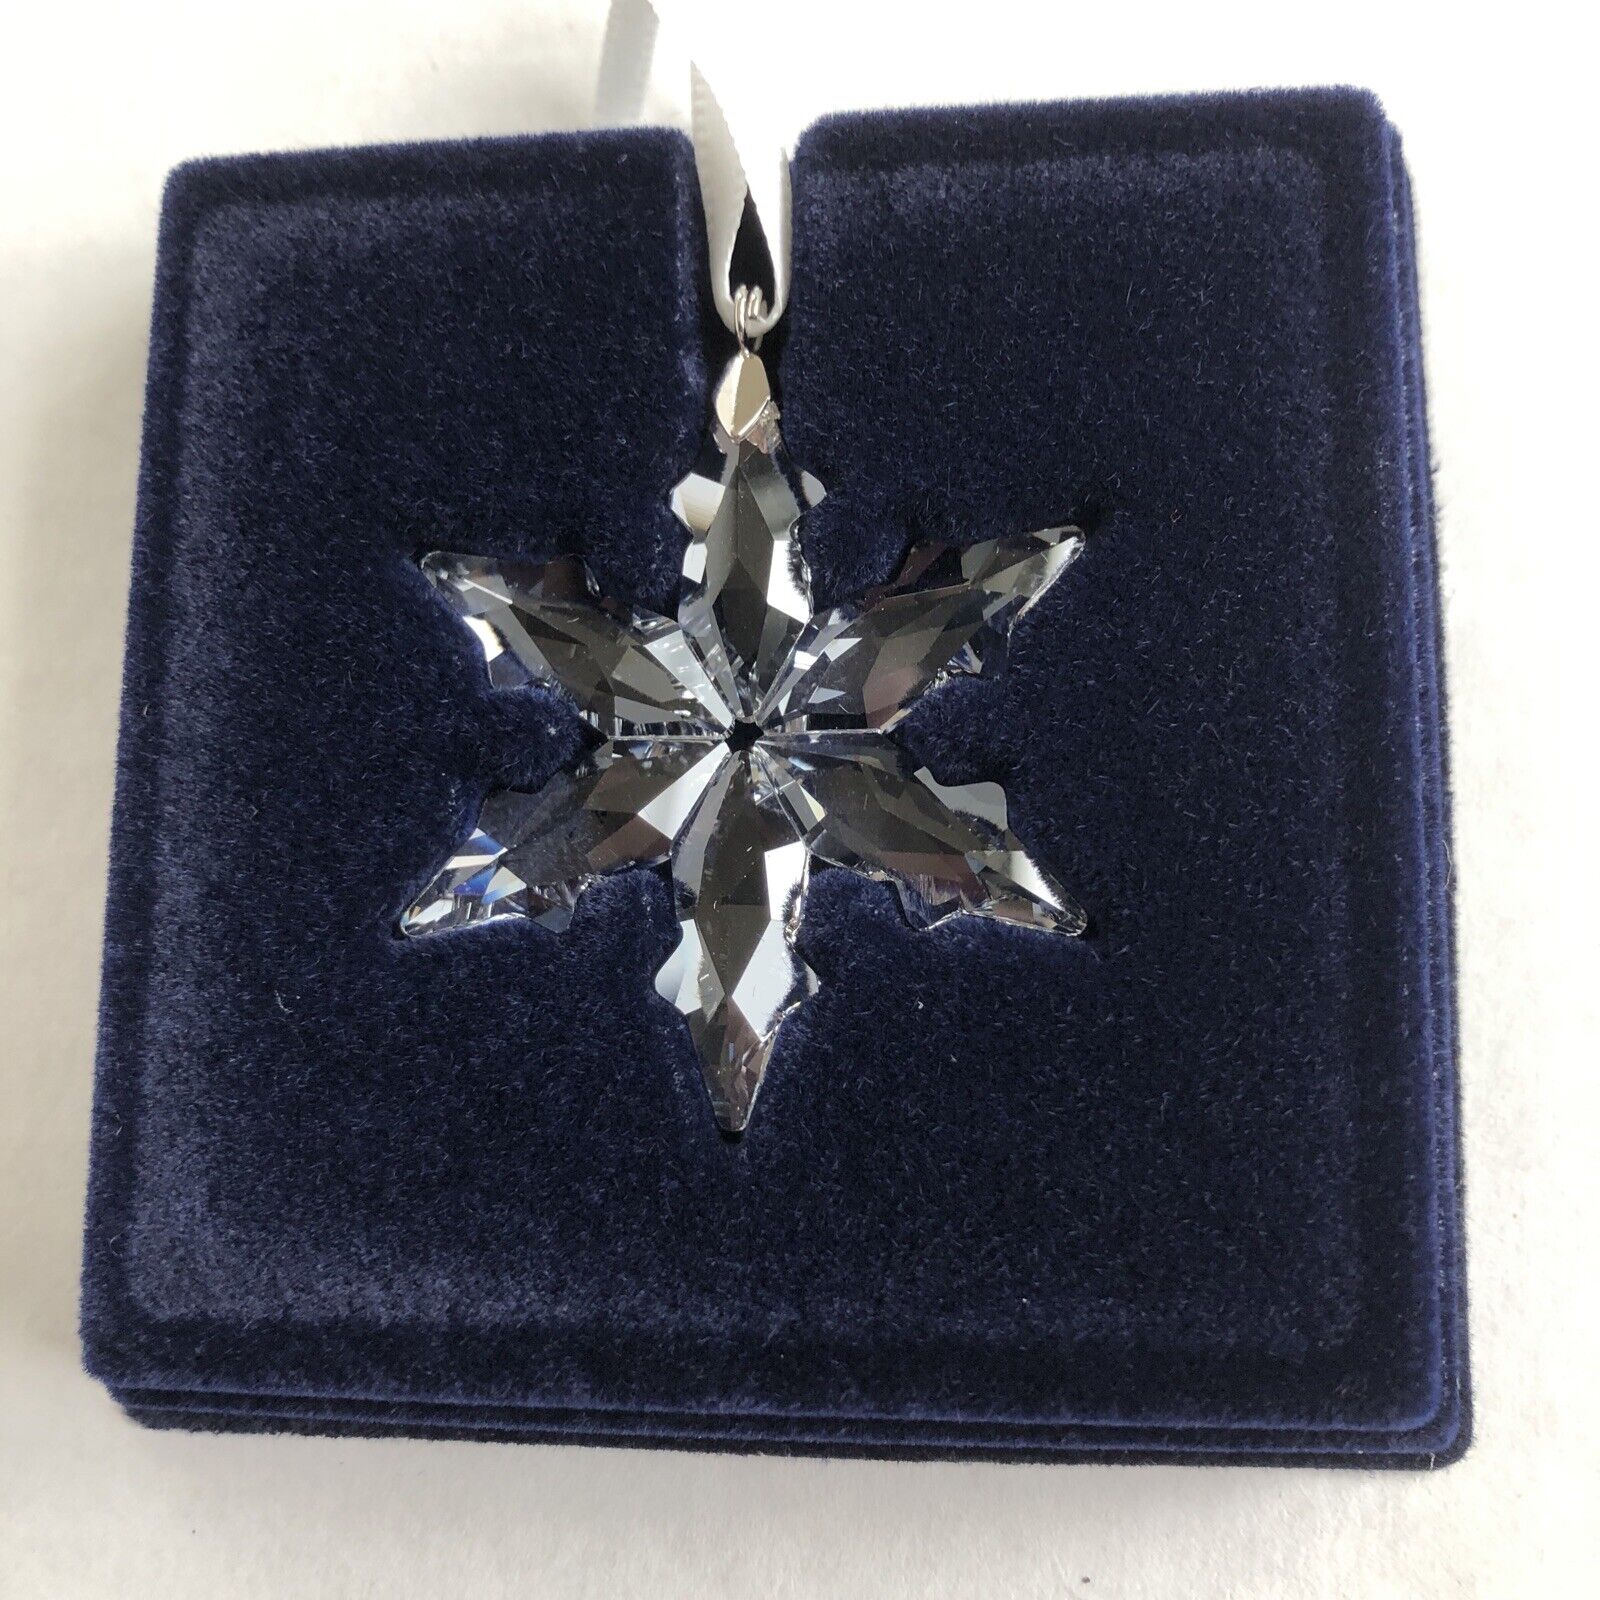 2015 Swarovski LITTLE/SMALL Snowflake /Star Ornament NIB #5100235 NIB